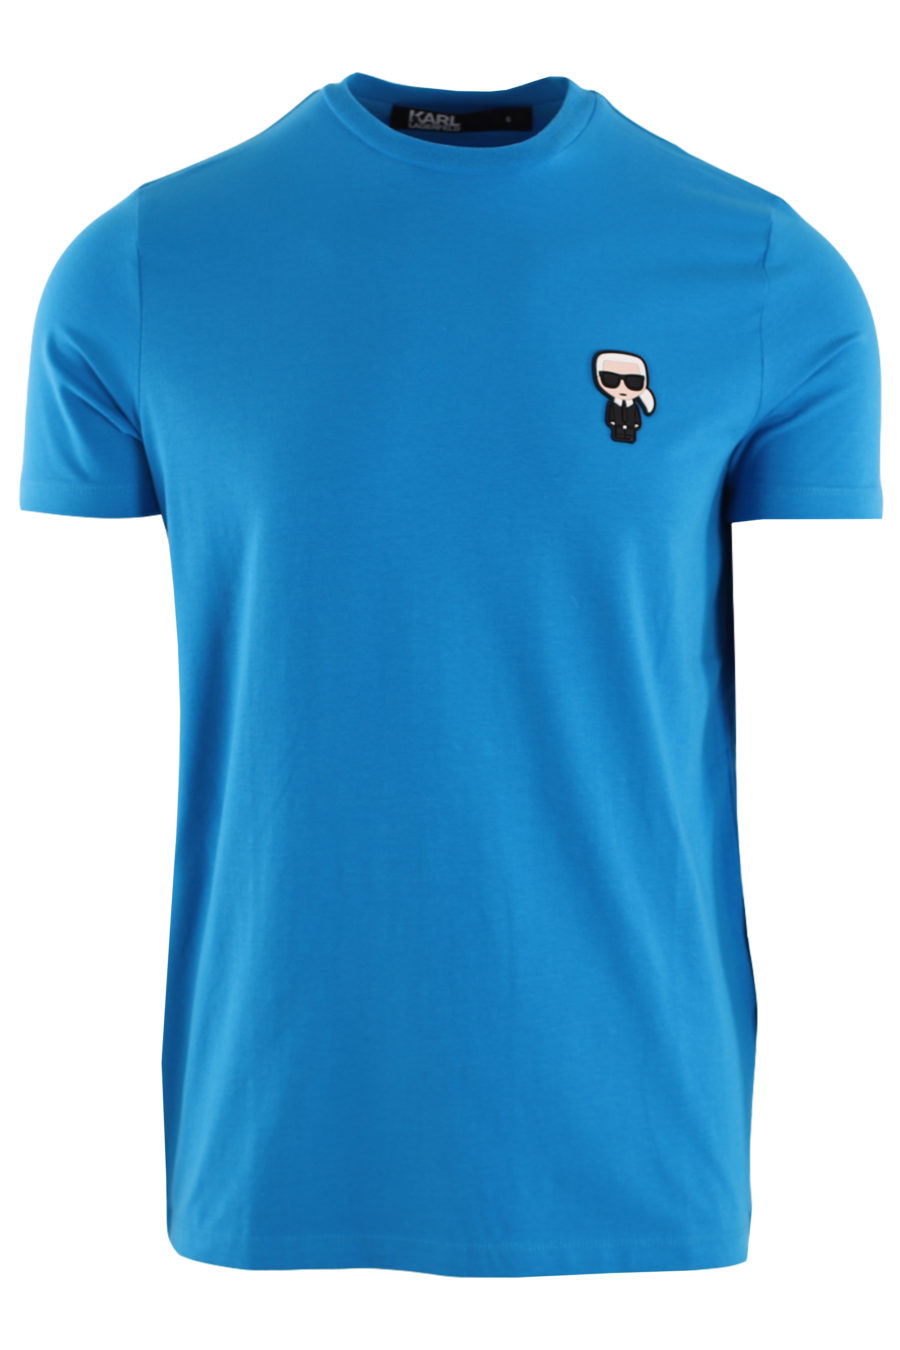 T-shirt azul com pequeno logótipo de borracha - IMG 8741